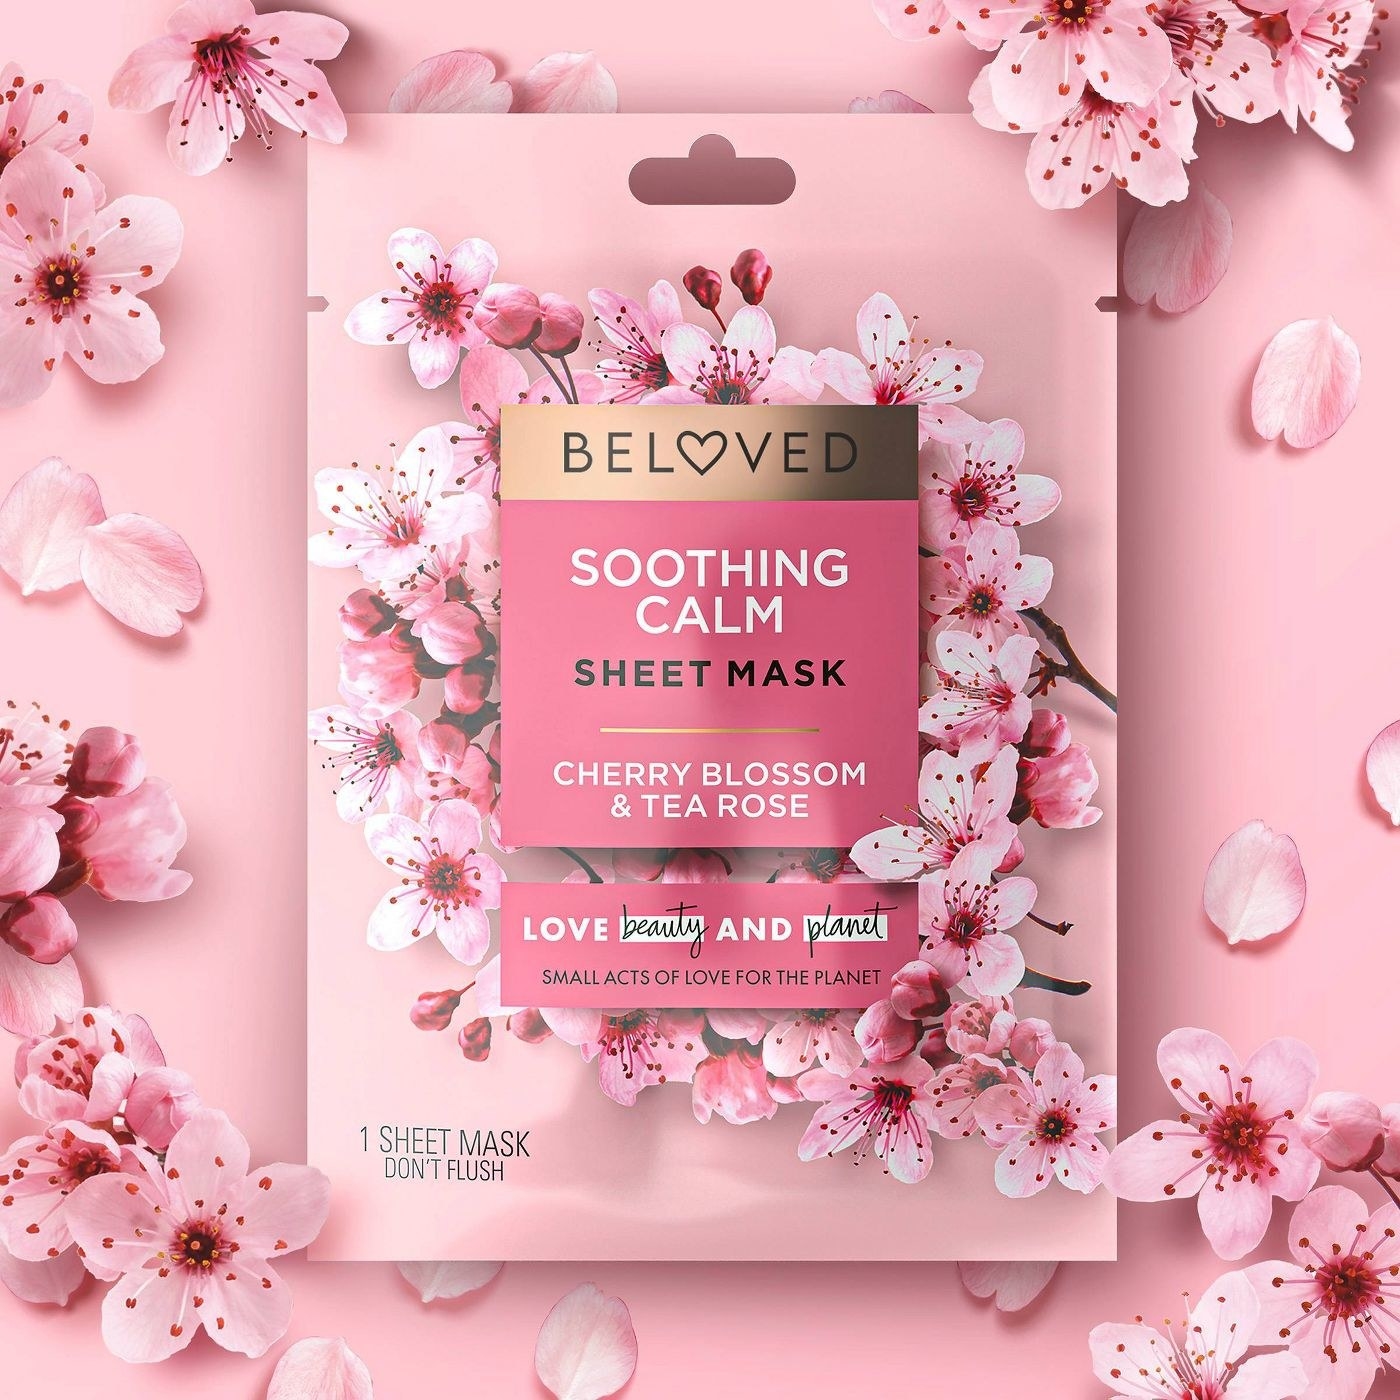 The cherry blossom &amp;amp; tea rose face mask